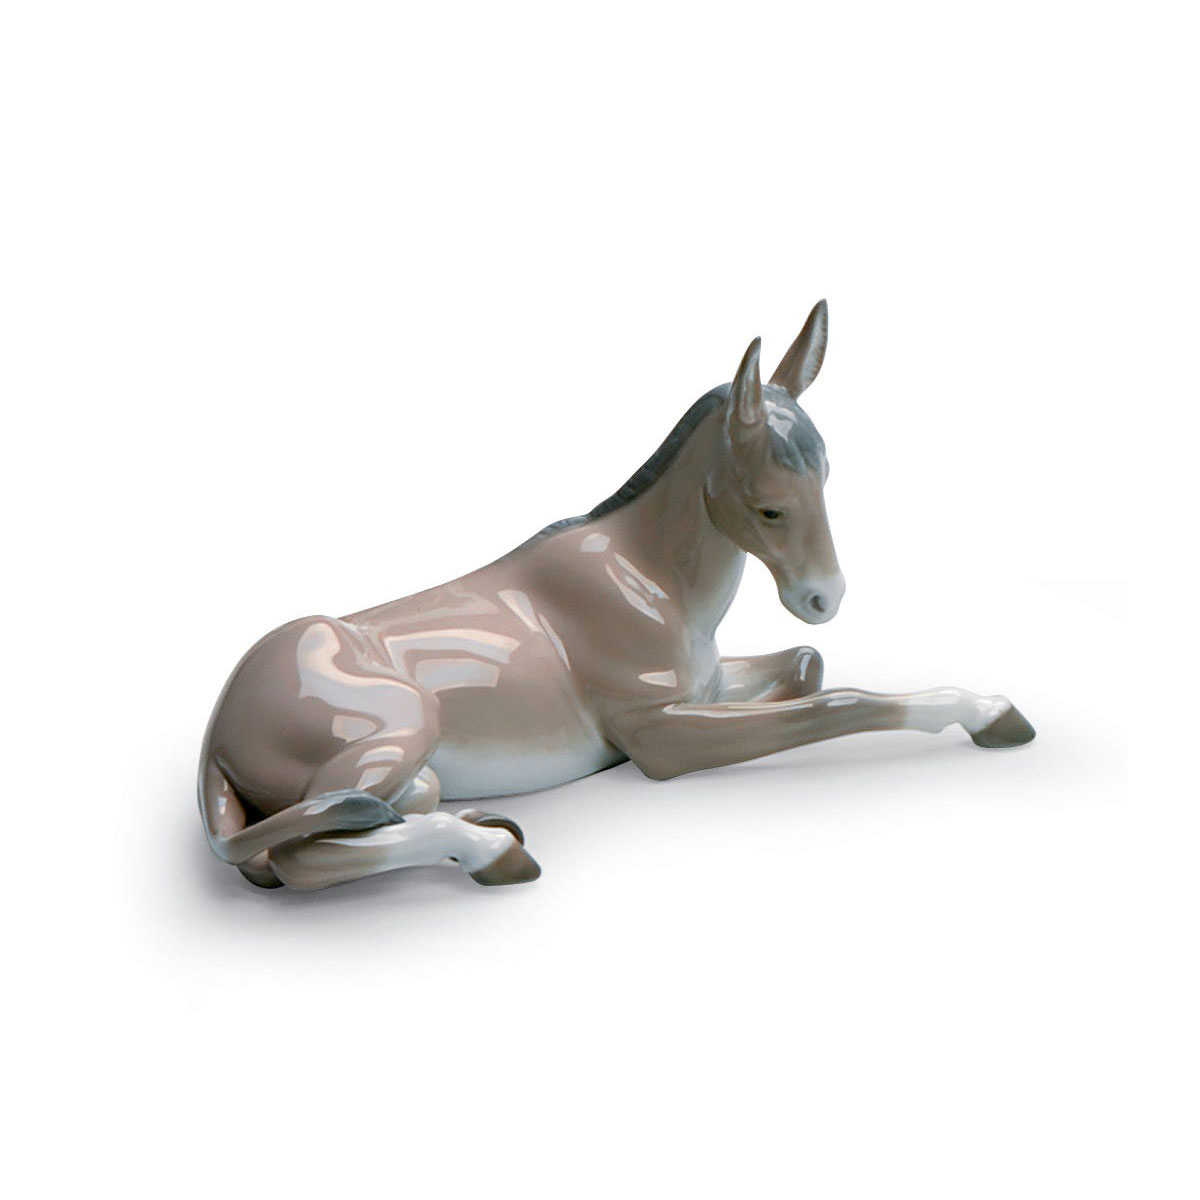 Lladro Classic Sculpture, Donkey Nativity Figurine